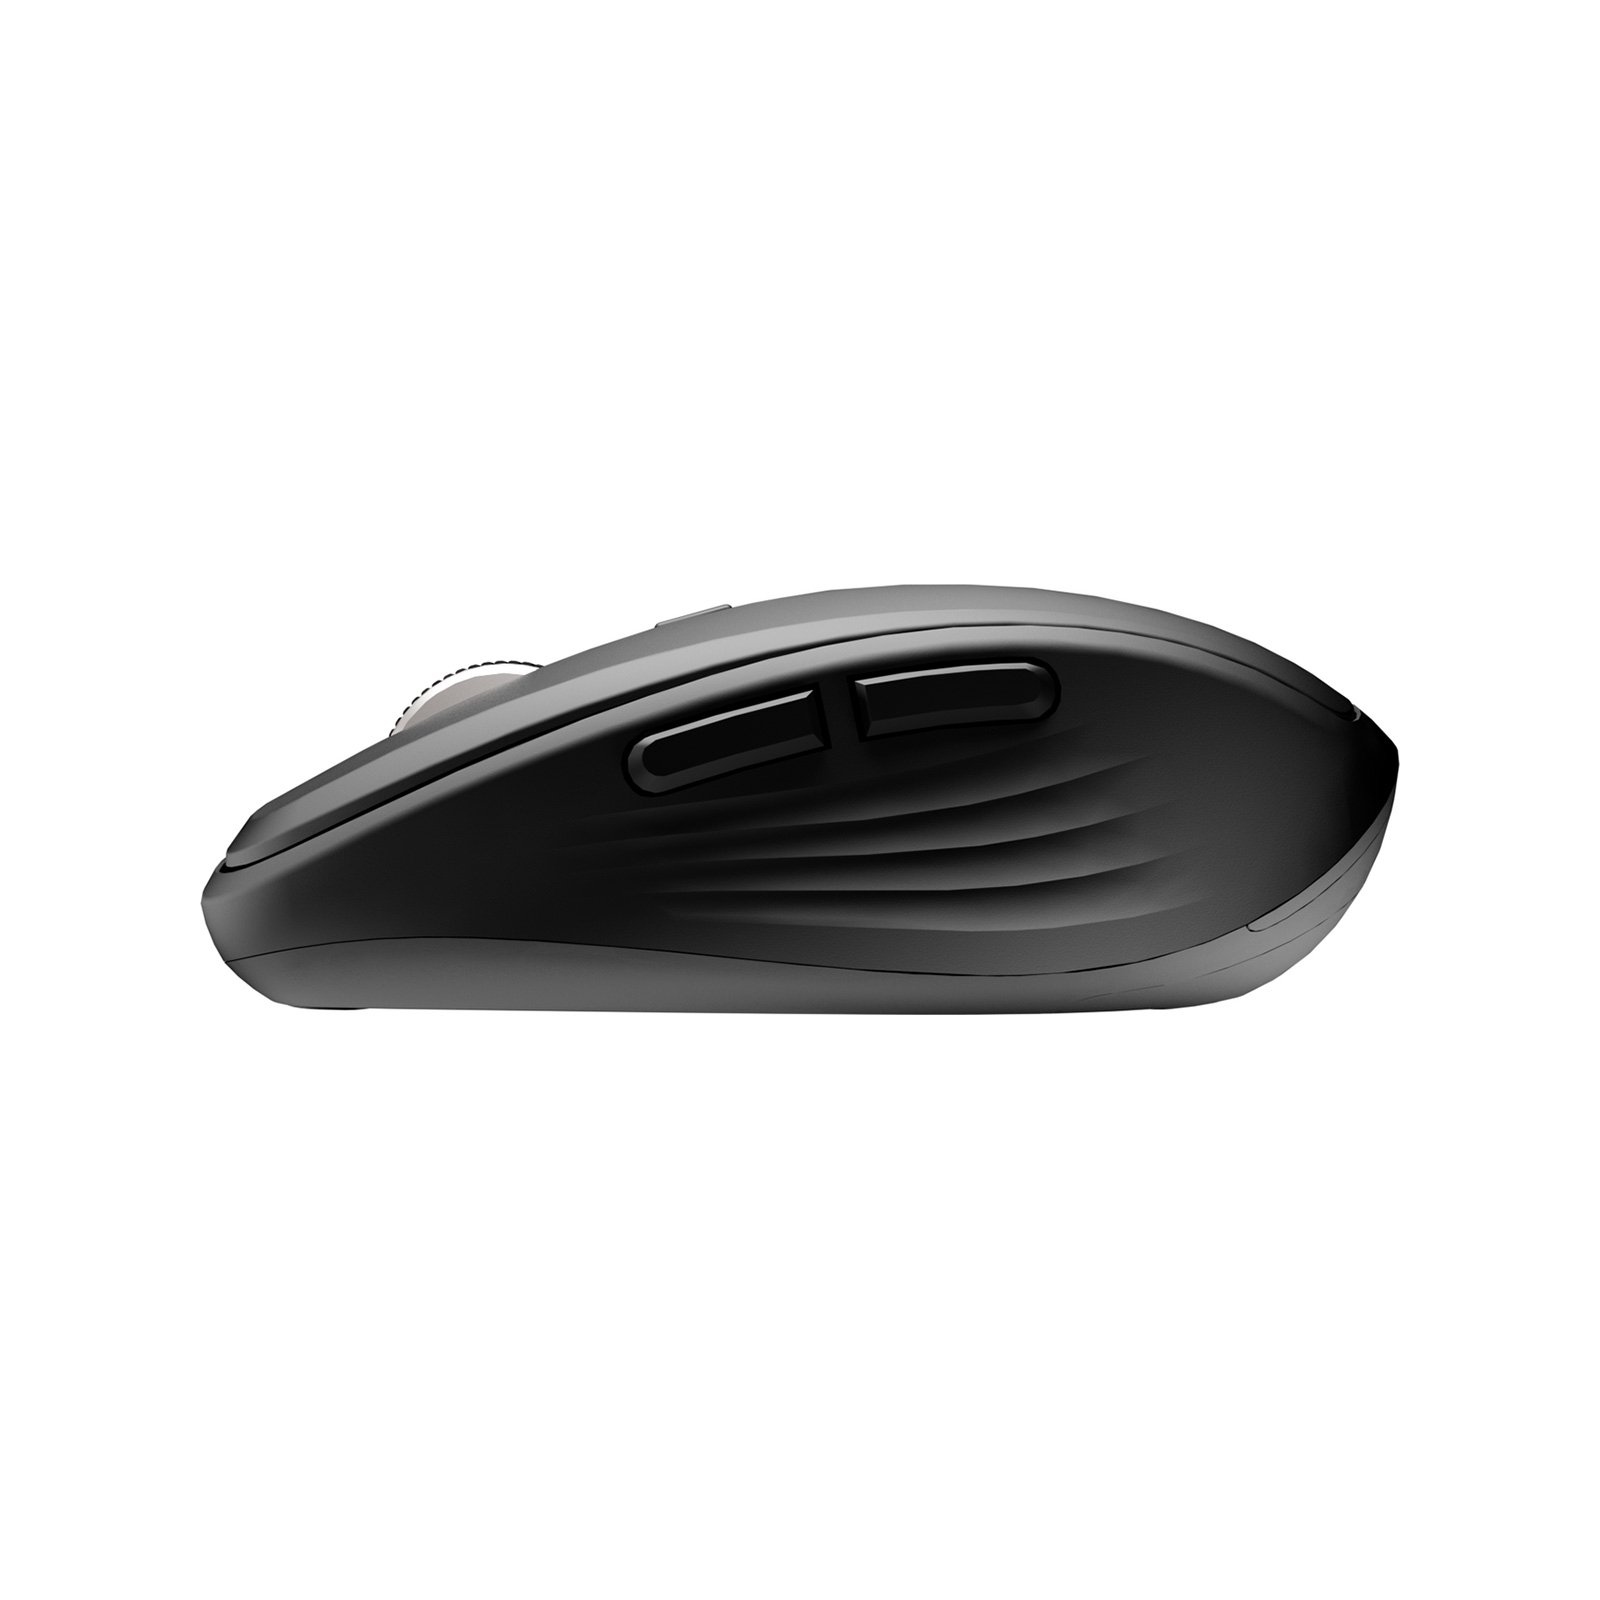 Мышка OfficePro M267G Silent Click Wireless Gray (M267G) изображение 3